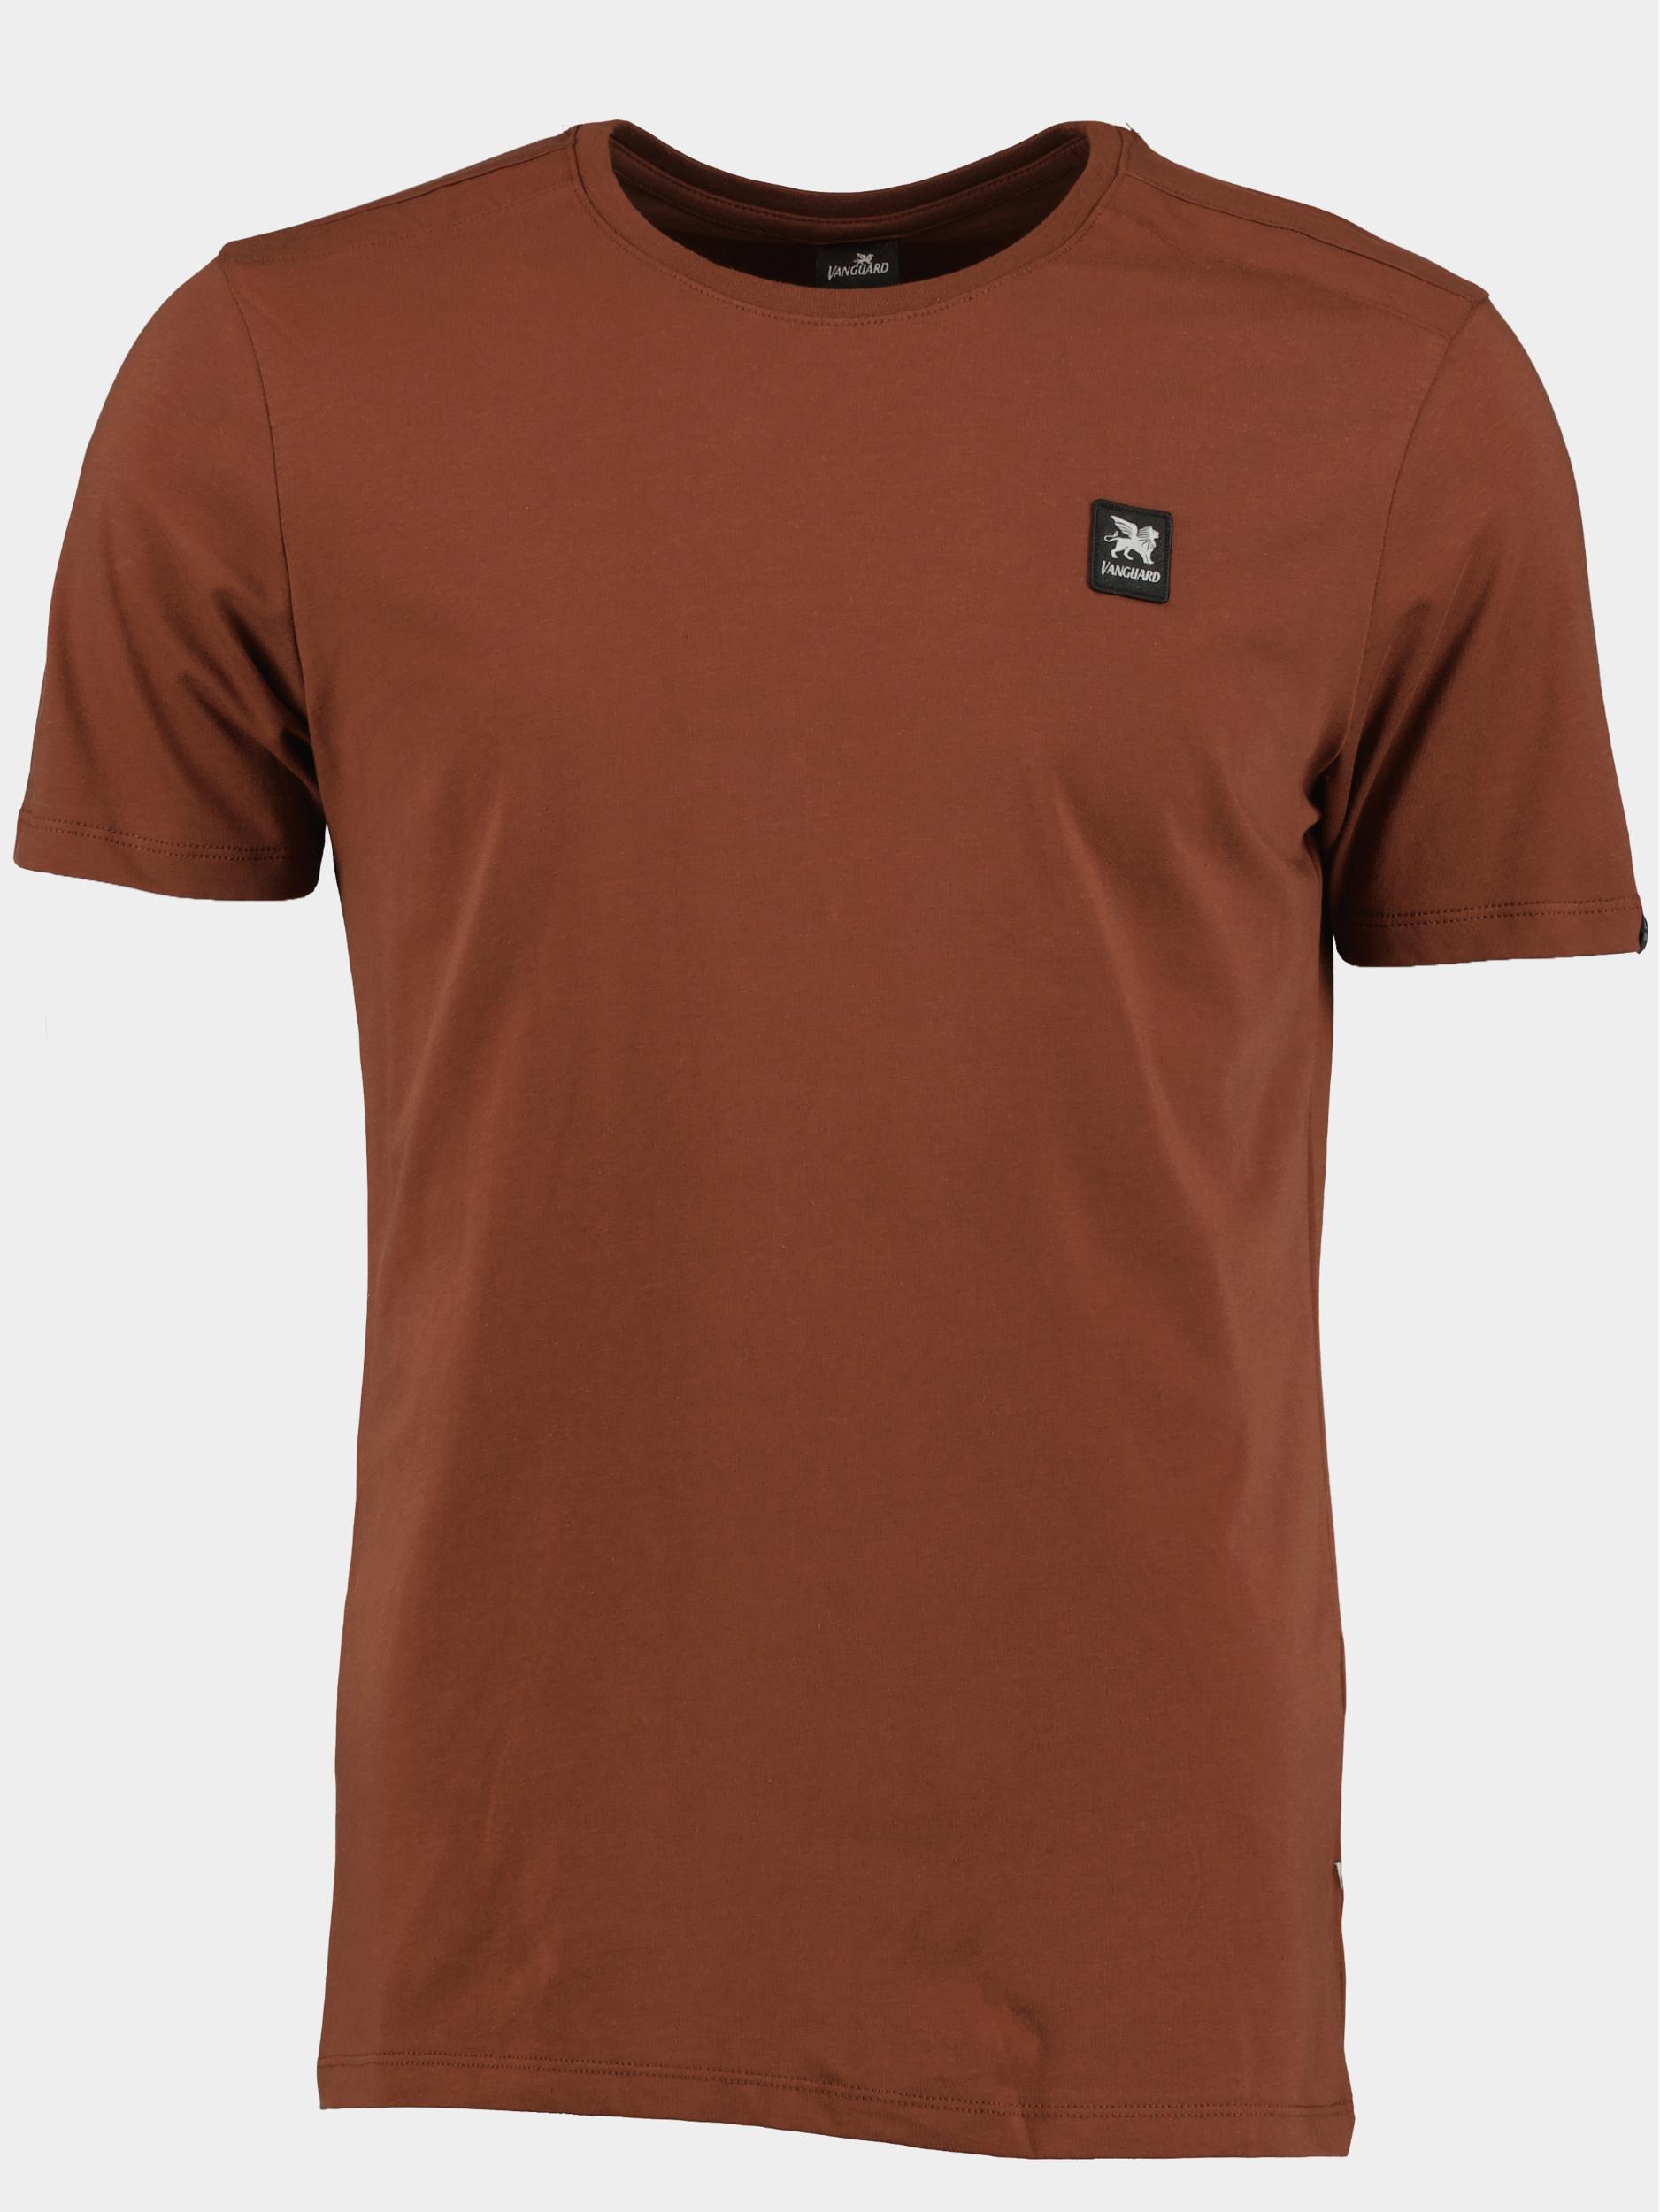 Vanguard T-shirt korte mouw Bruin Short sleeve r-neck cotton el VTSS2309568/8250